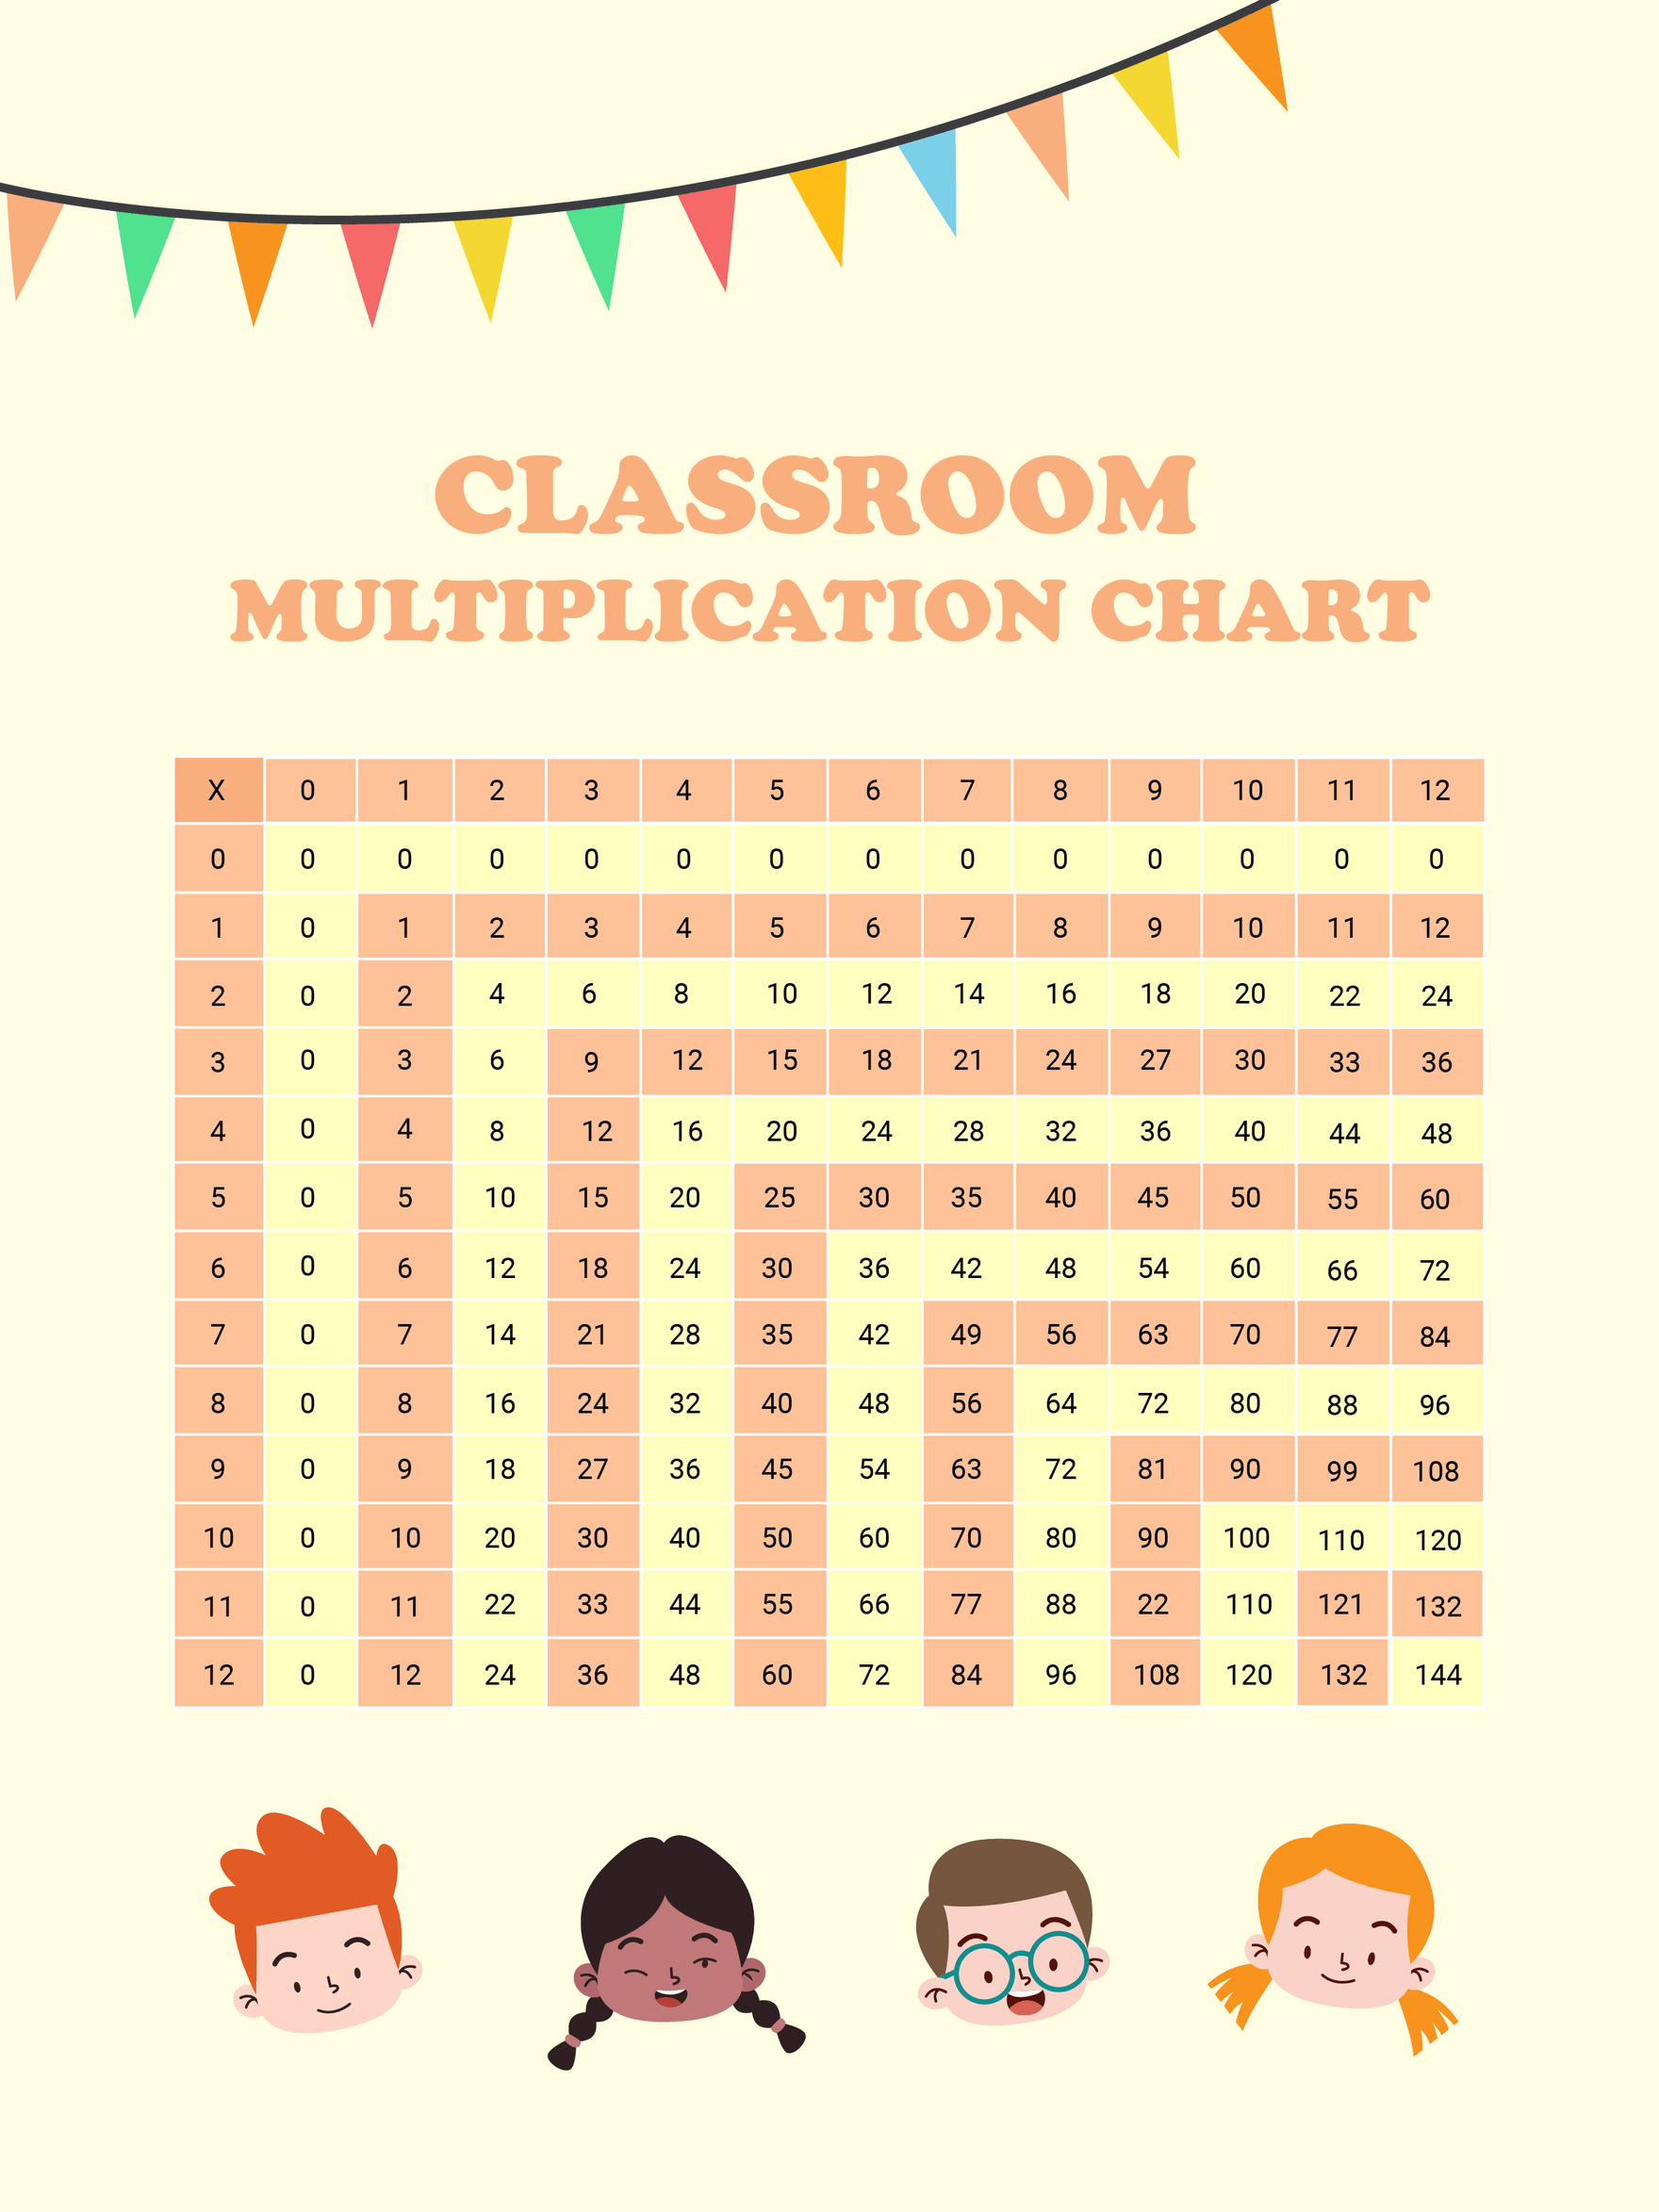 Free Classroom Multiplication Chart in PDF, Illustrator